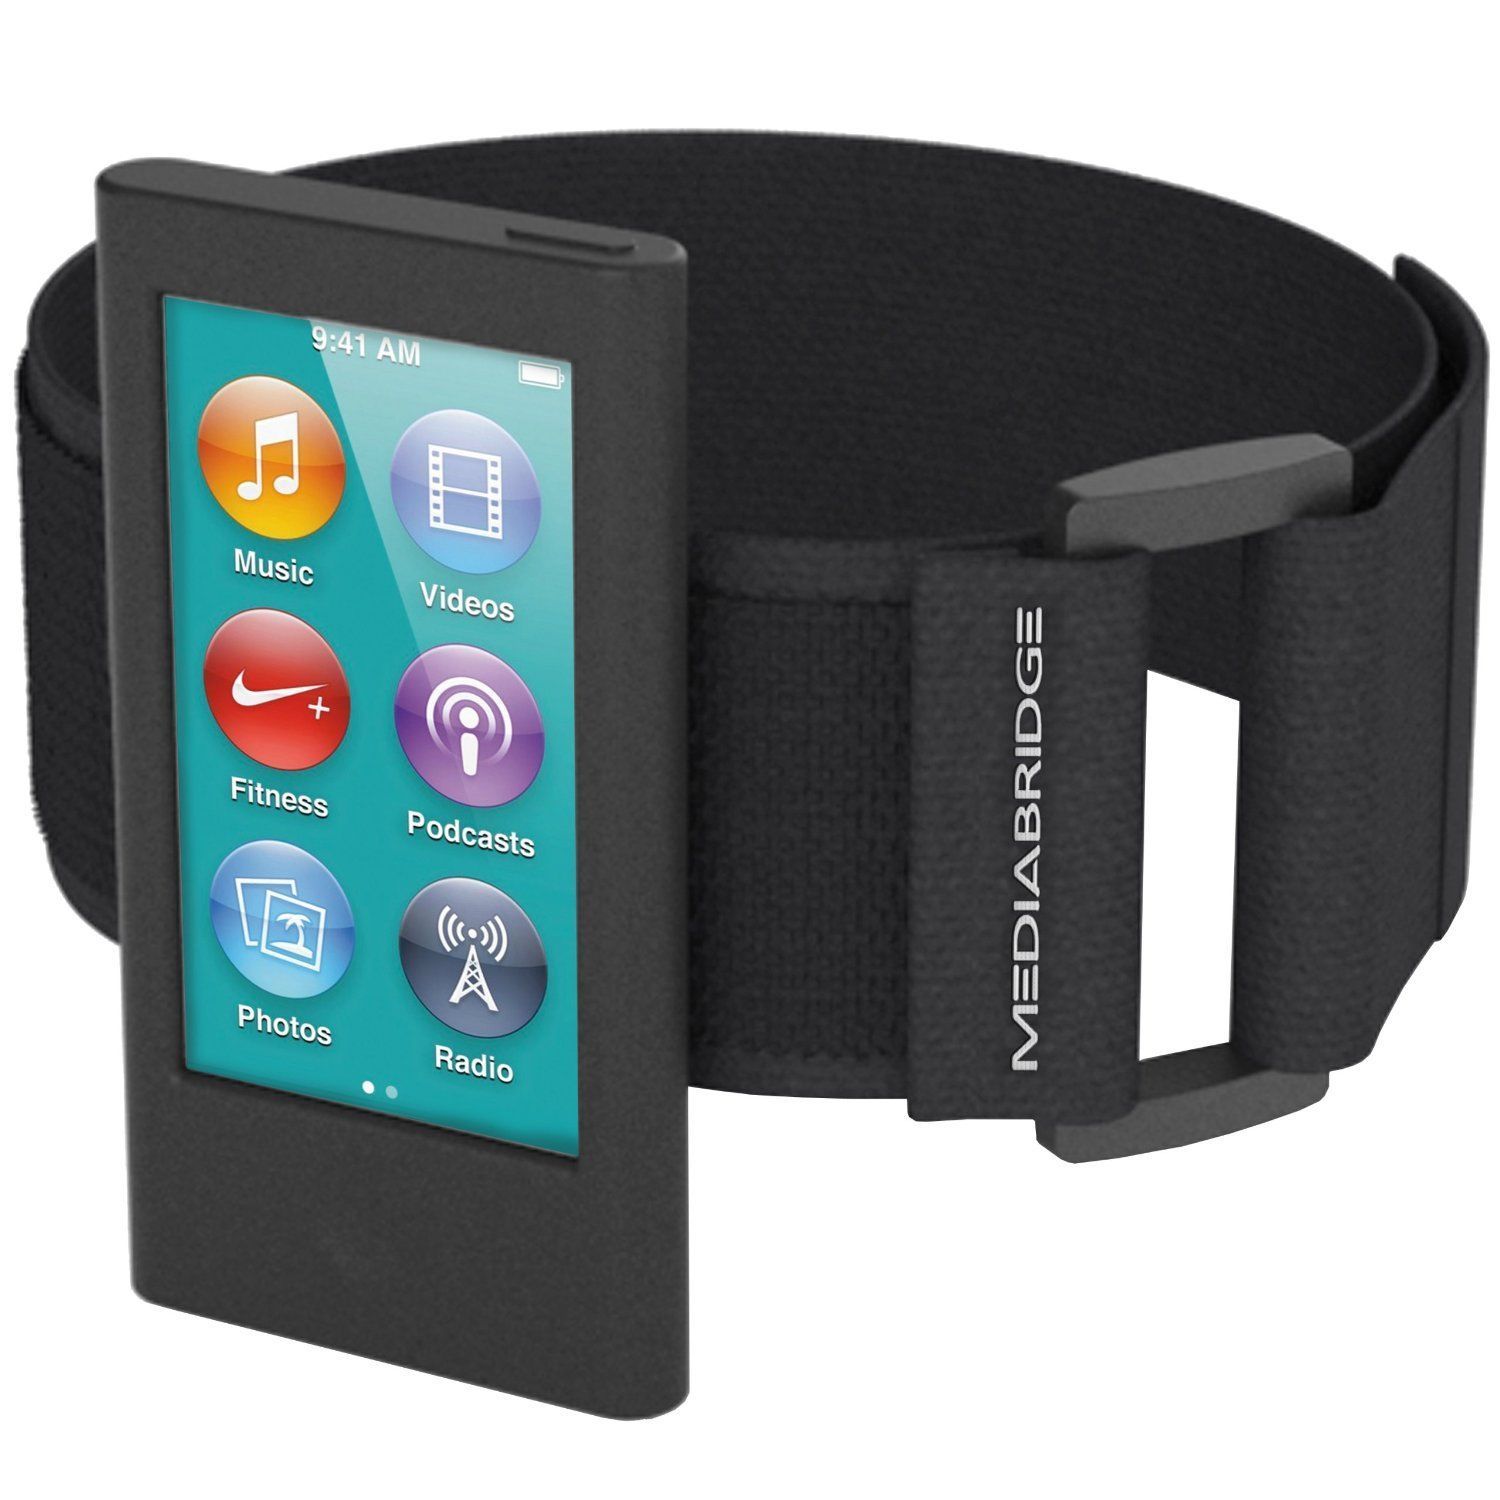 Sport Armband For Ipod Nano 7th Generation Black New Armbands